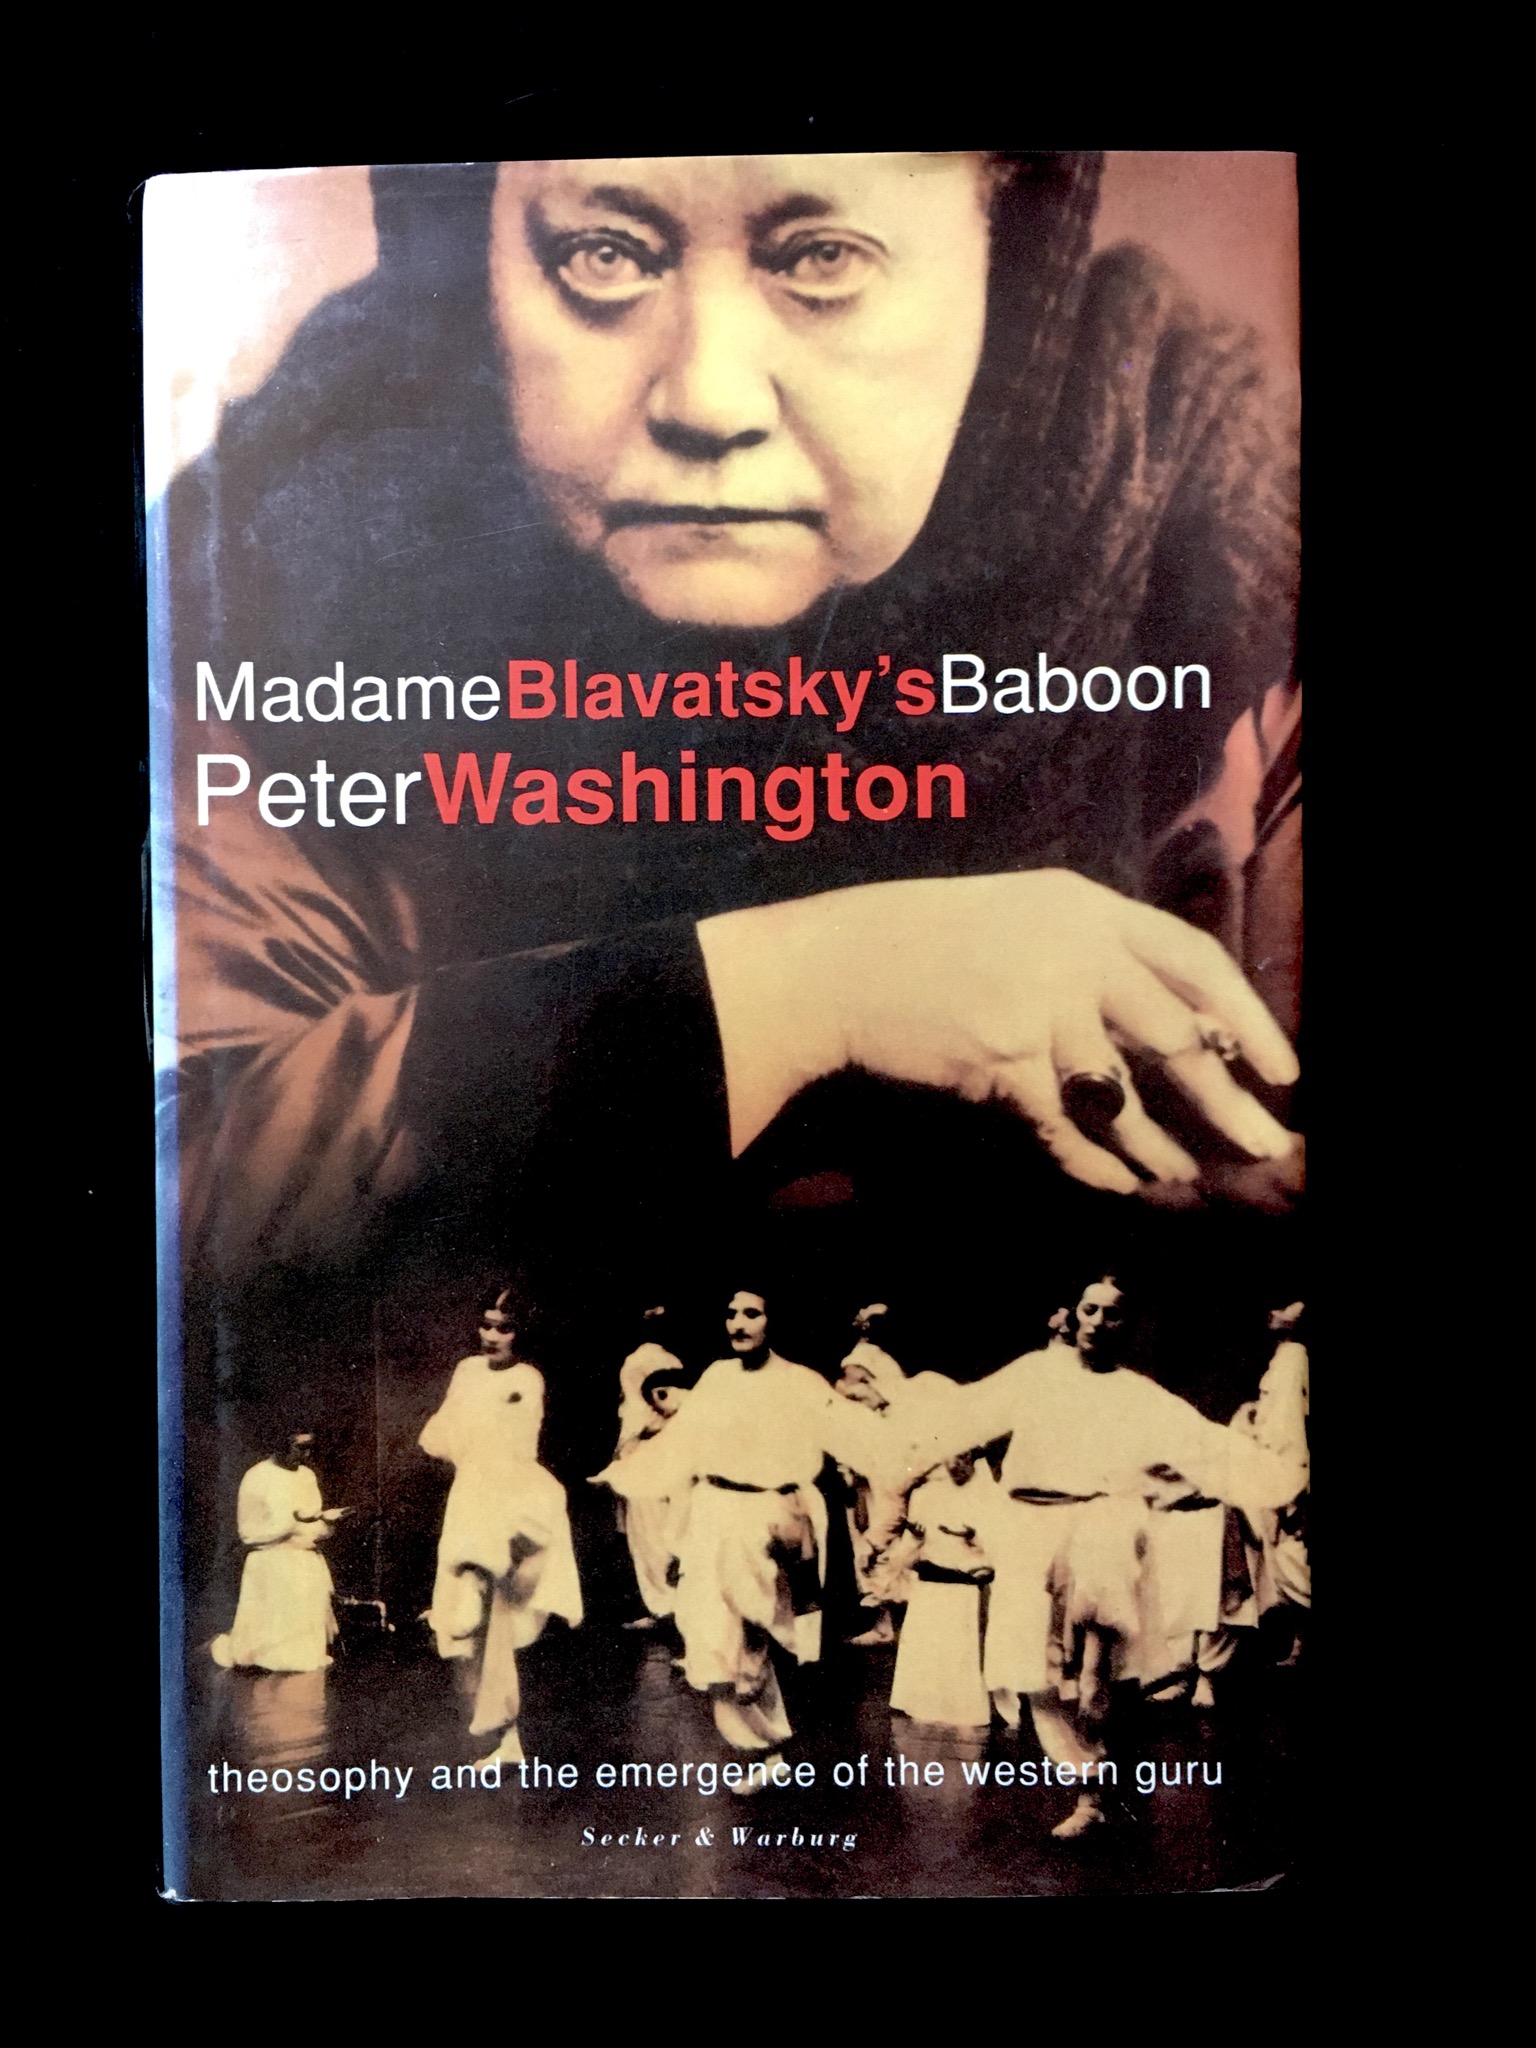 Madame Blavatsky's Baboon: Theosophy and the Emergence of the Western Guru by Peter Washington